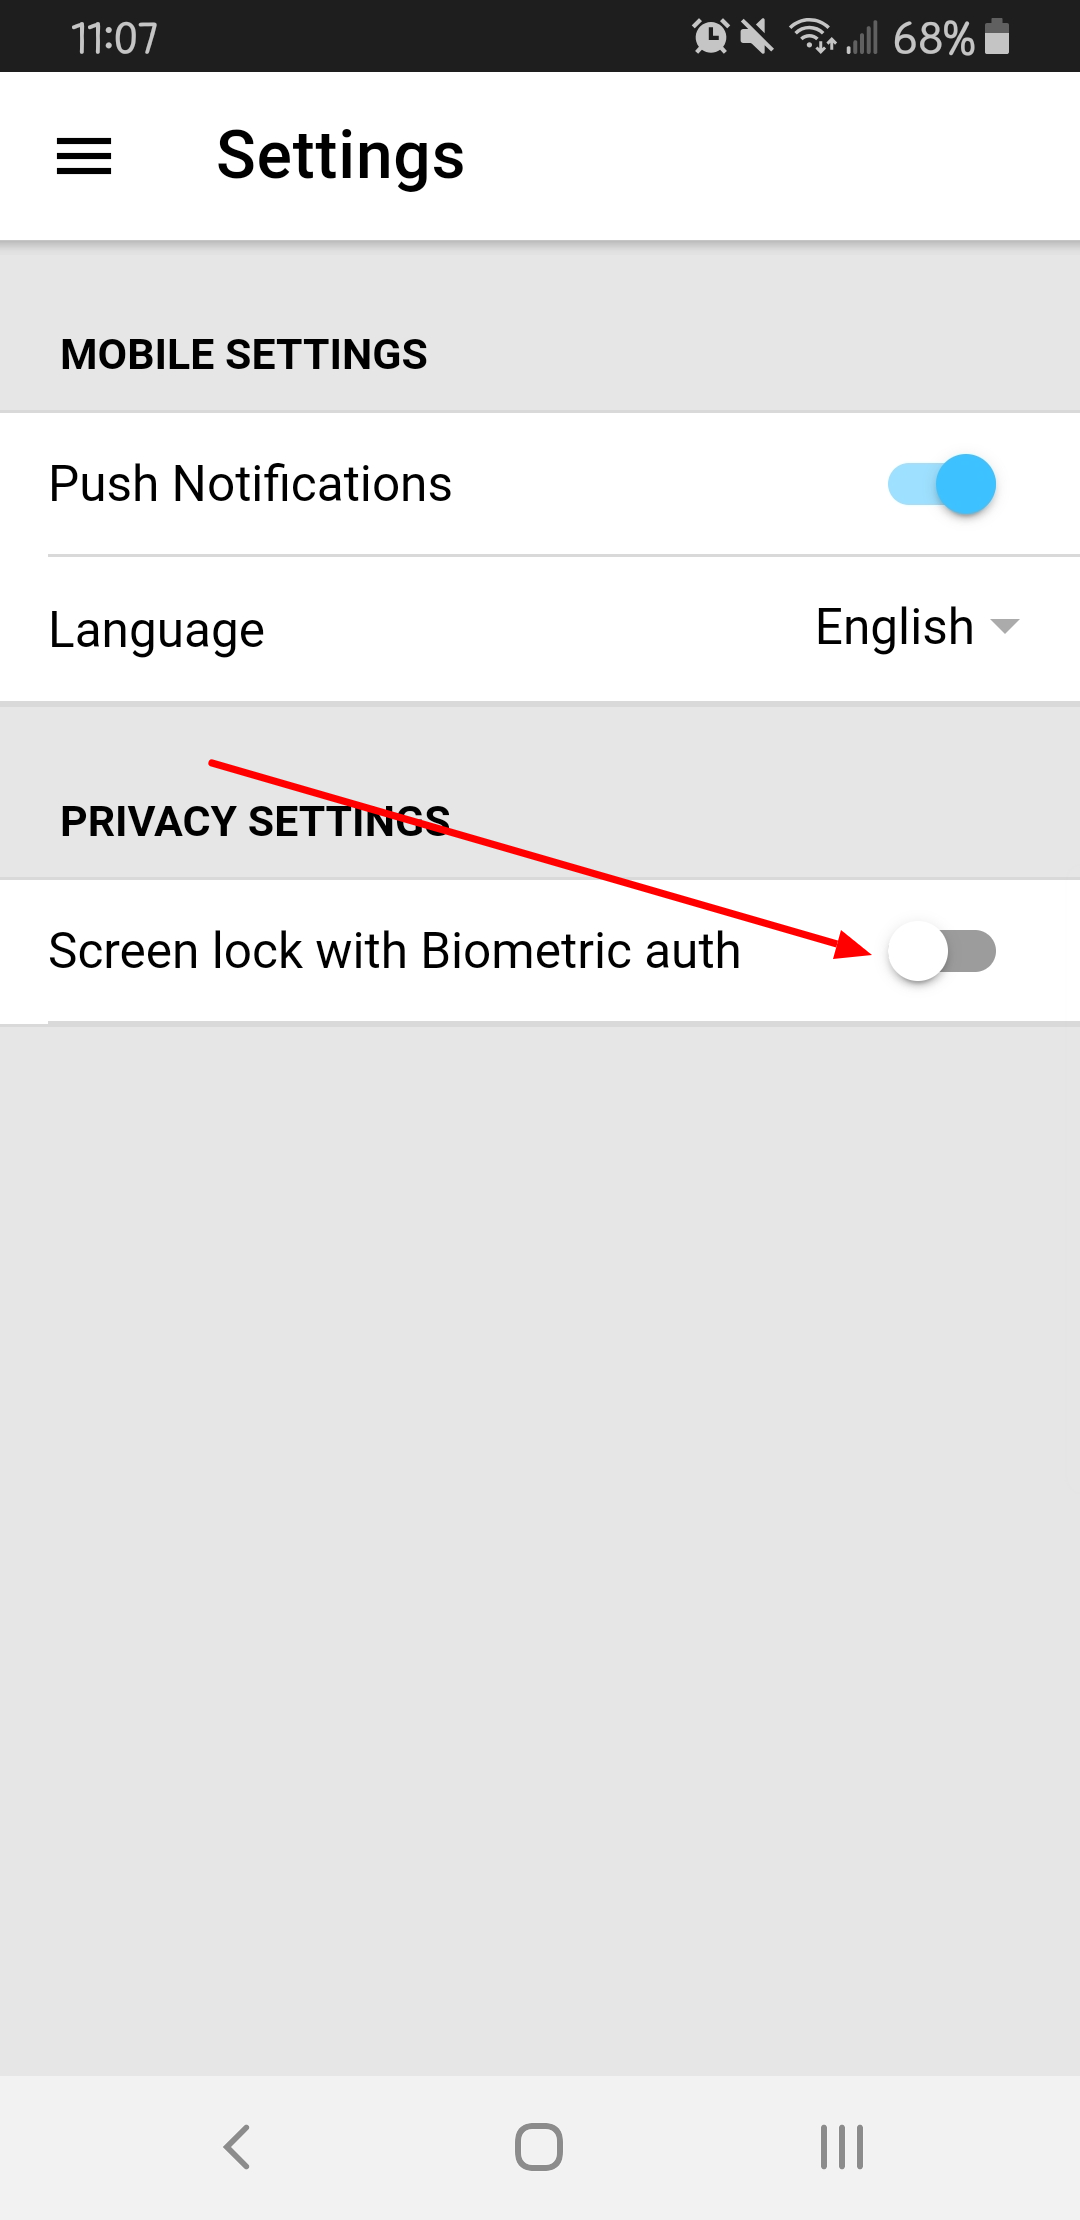 Toggle "Screen lock with Biometric auth"